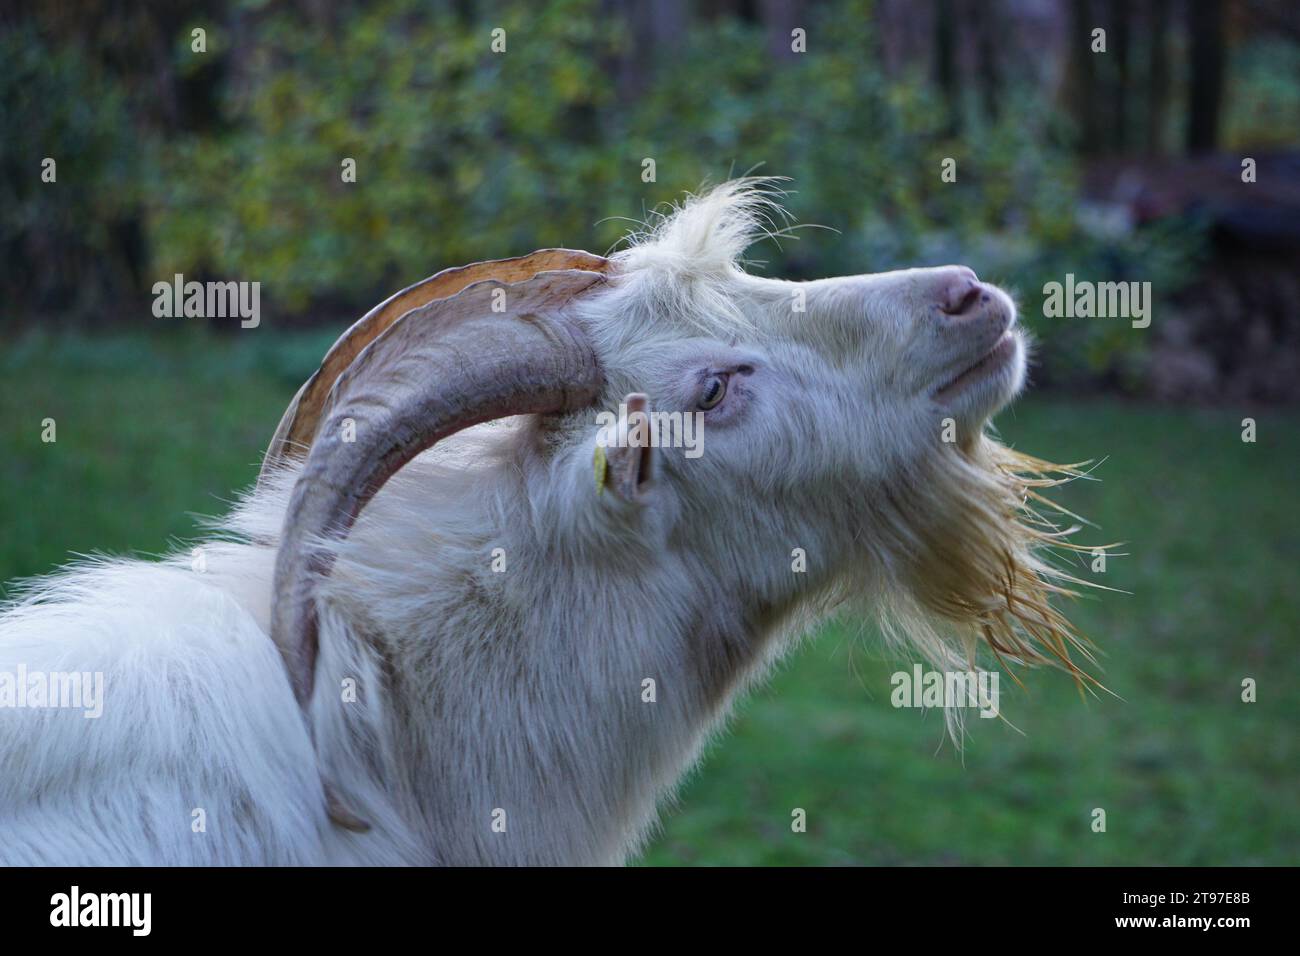 Una capra dalla pelliccia bianca con lunghe corna a spirale Foto Stock